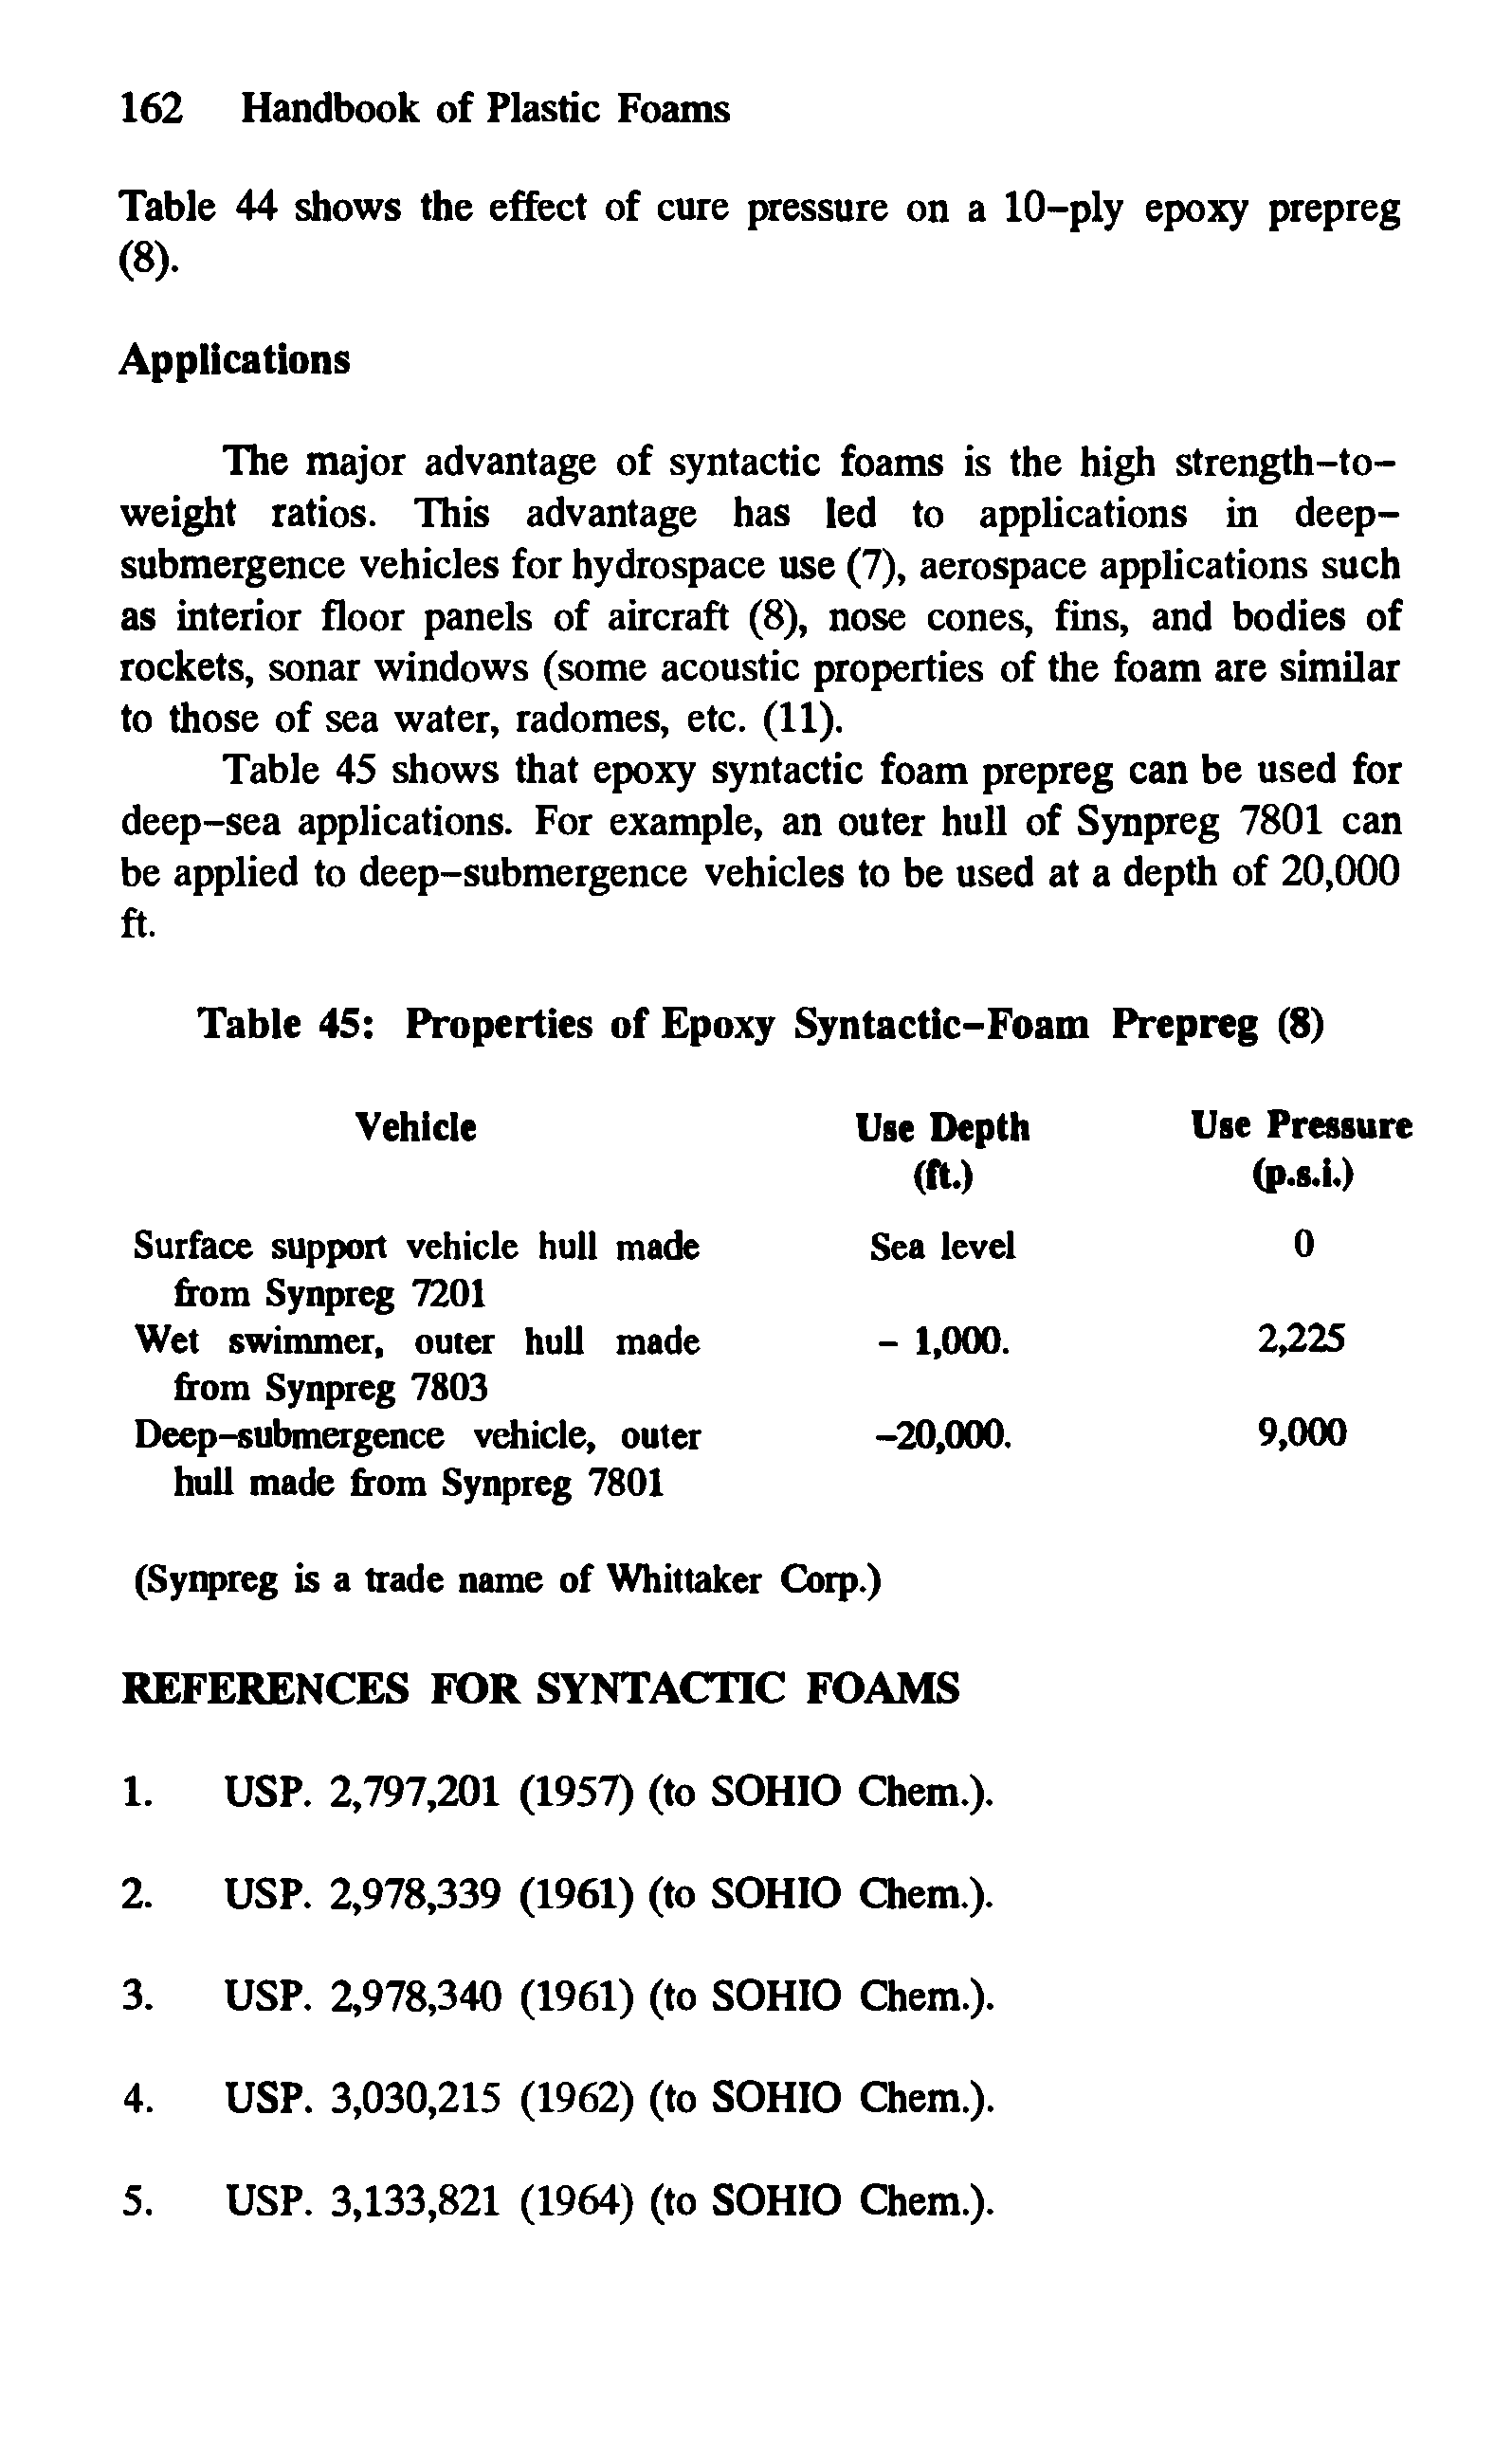 Table 45 Properties of Epoxy Syntactic-Foam Prepreg (8) Vehicle...